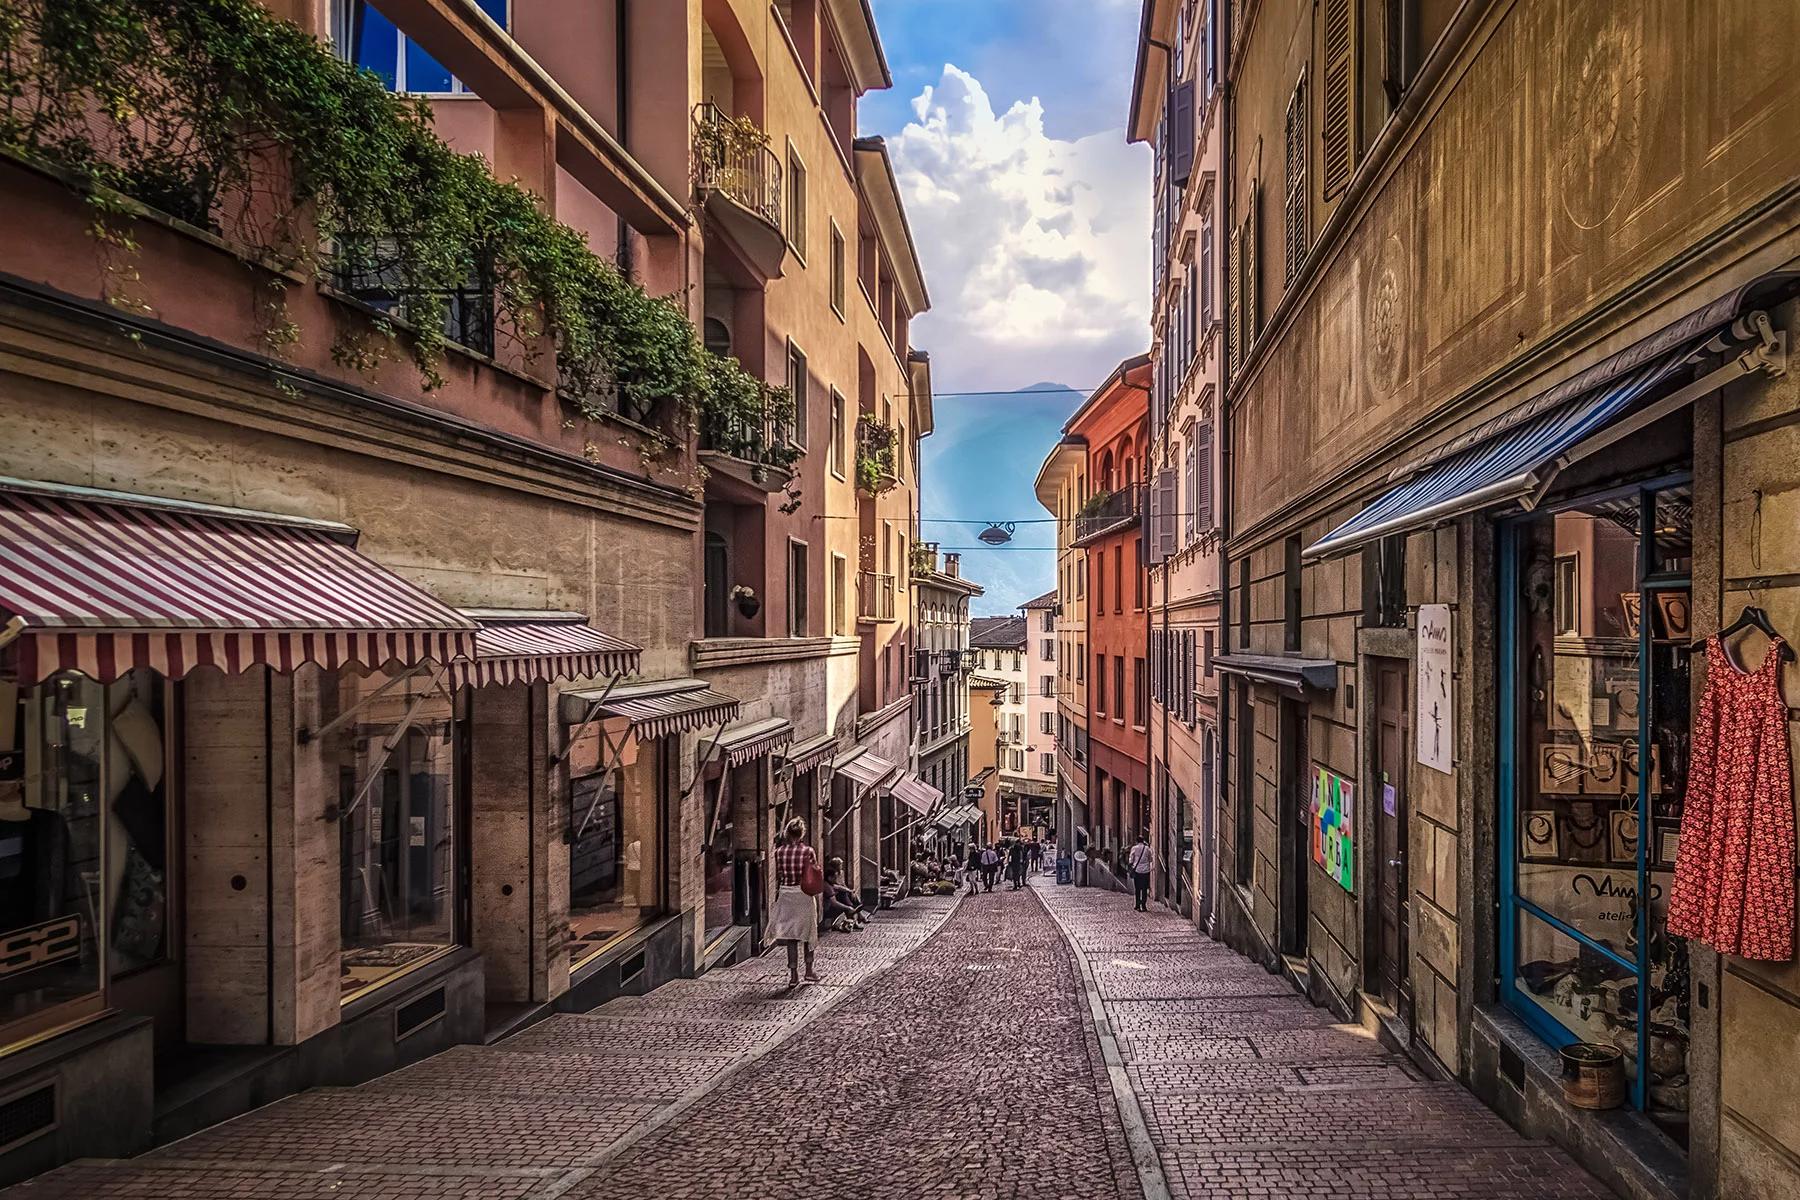 An historic street in Lugano, Switzerland